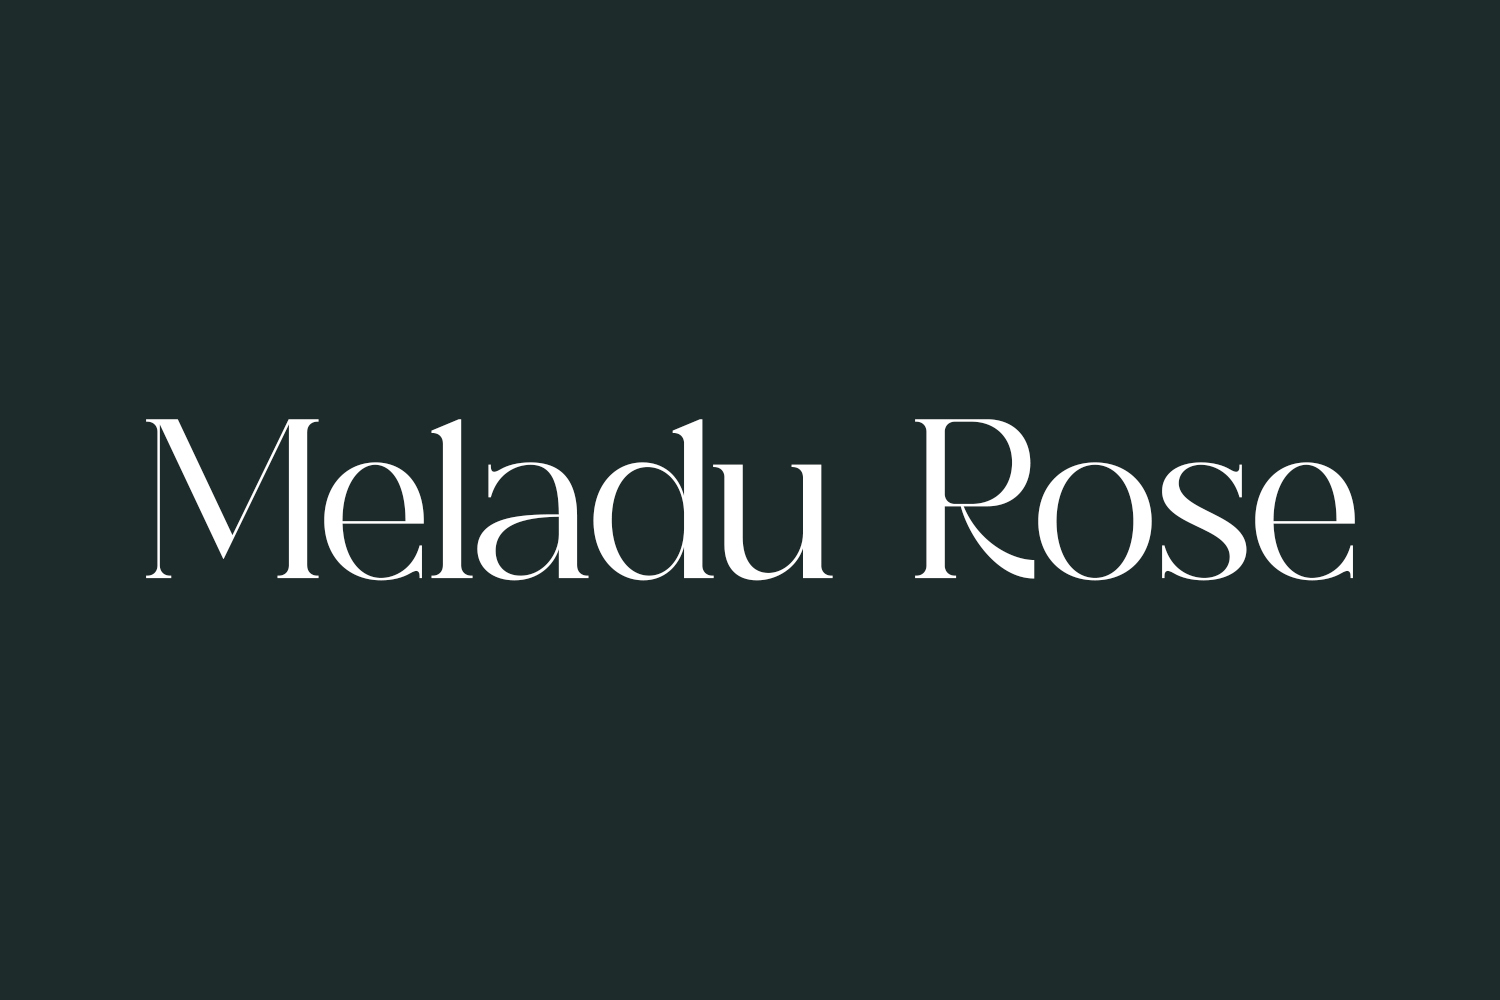 Meladu Rose Free Font